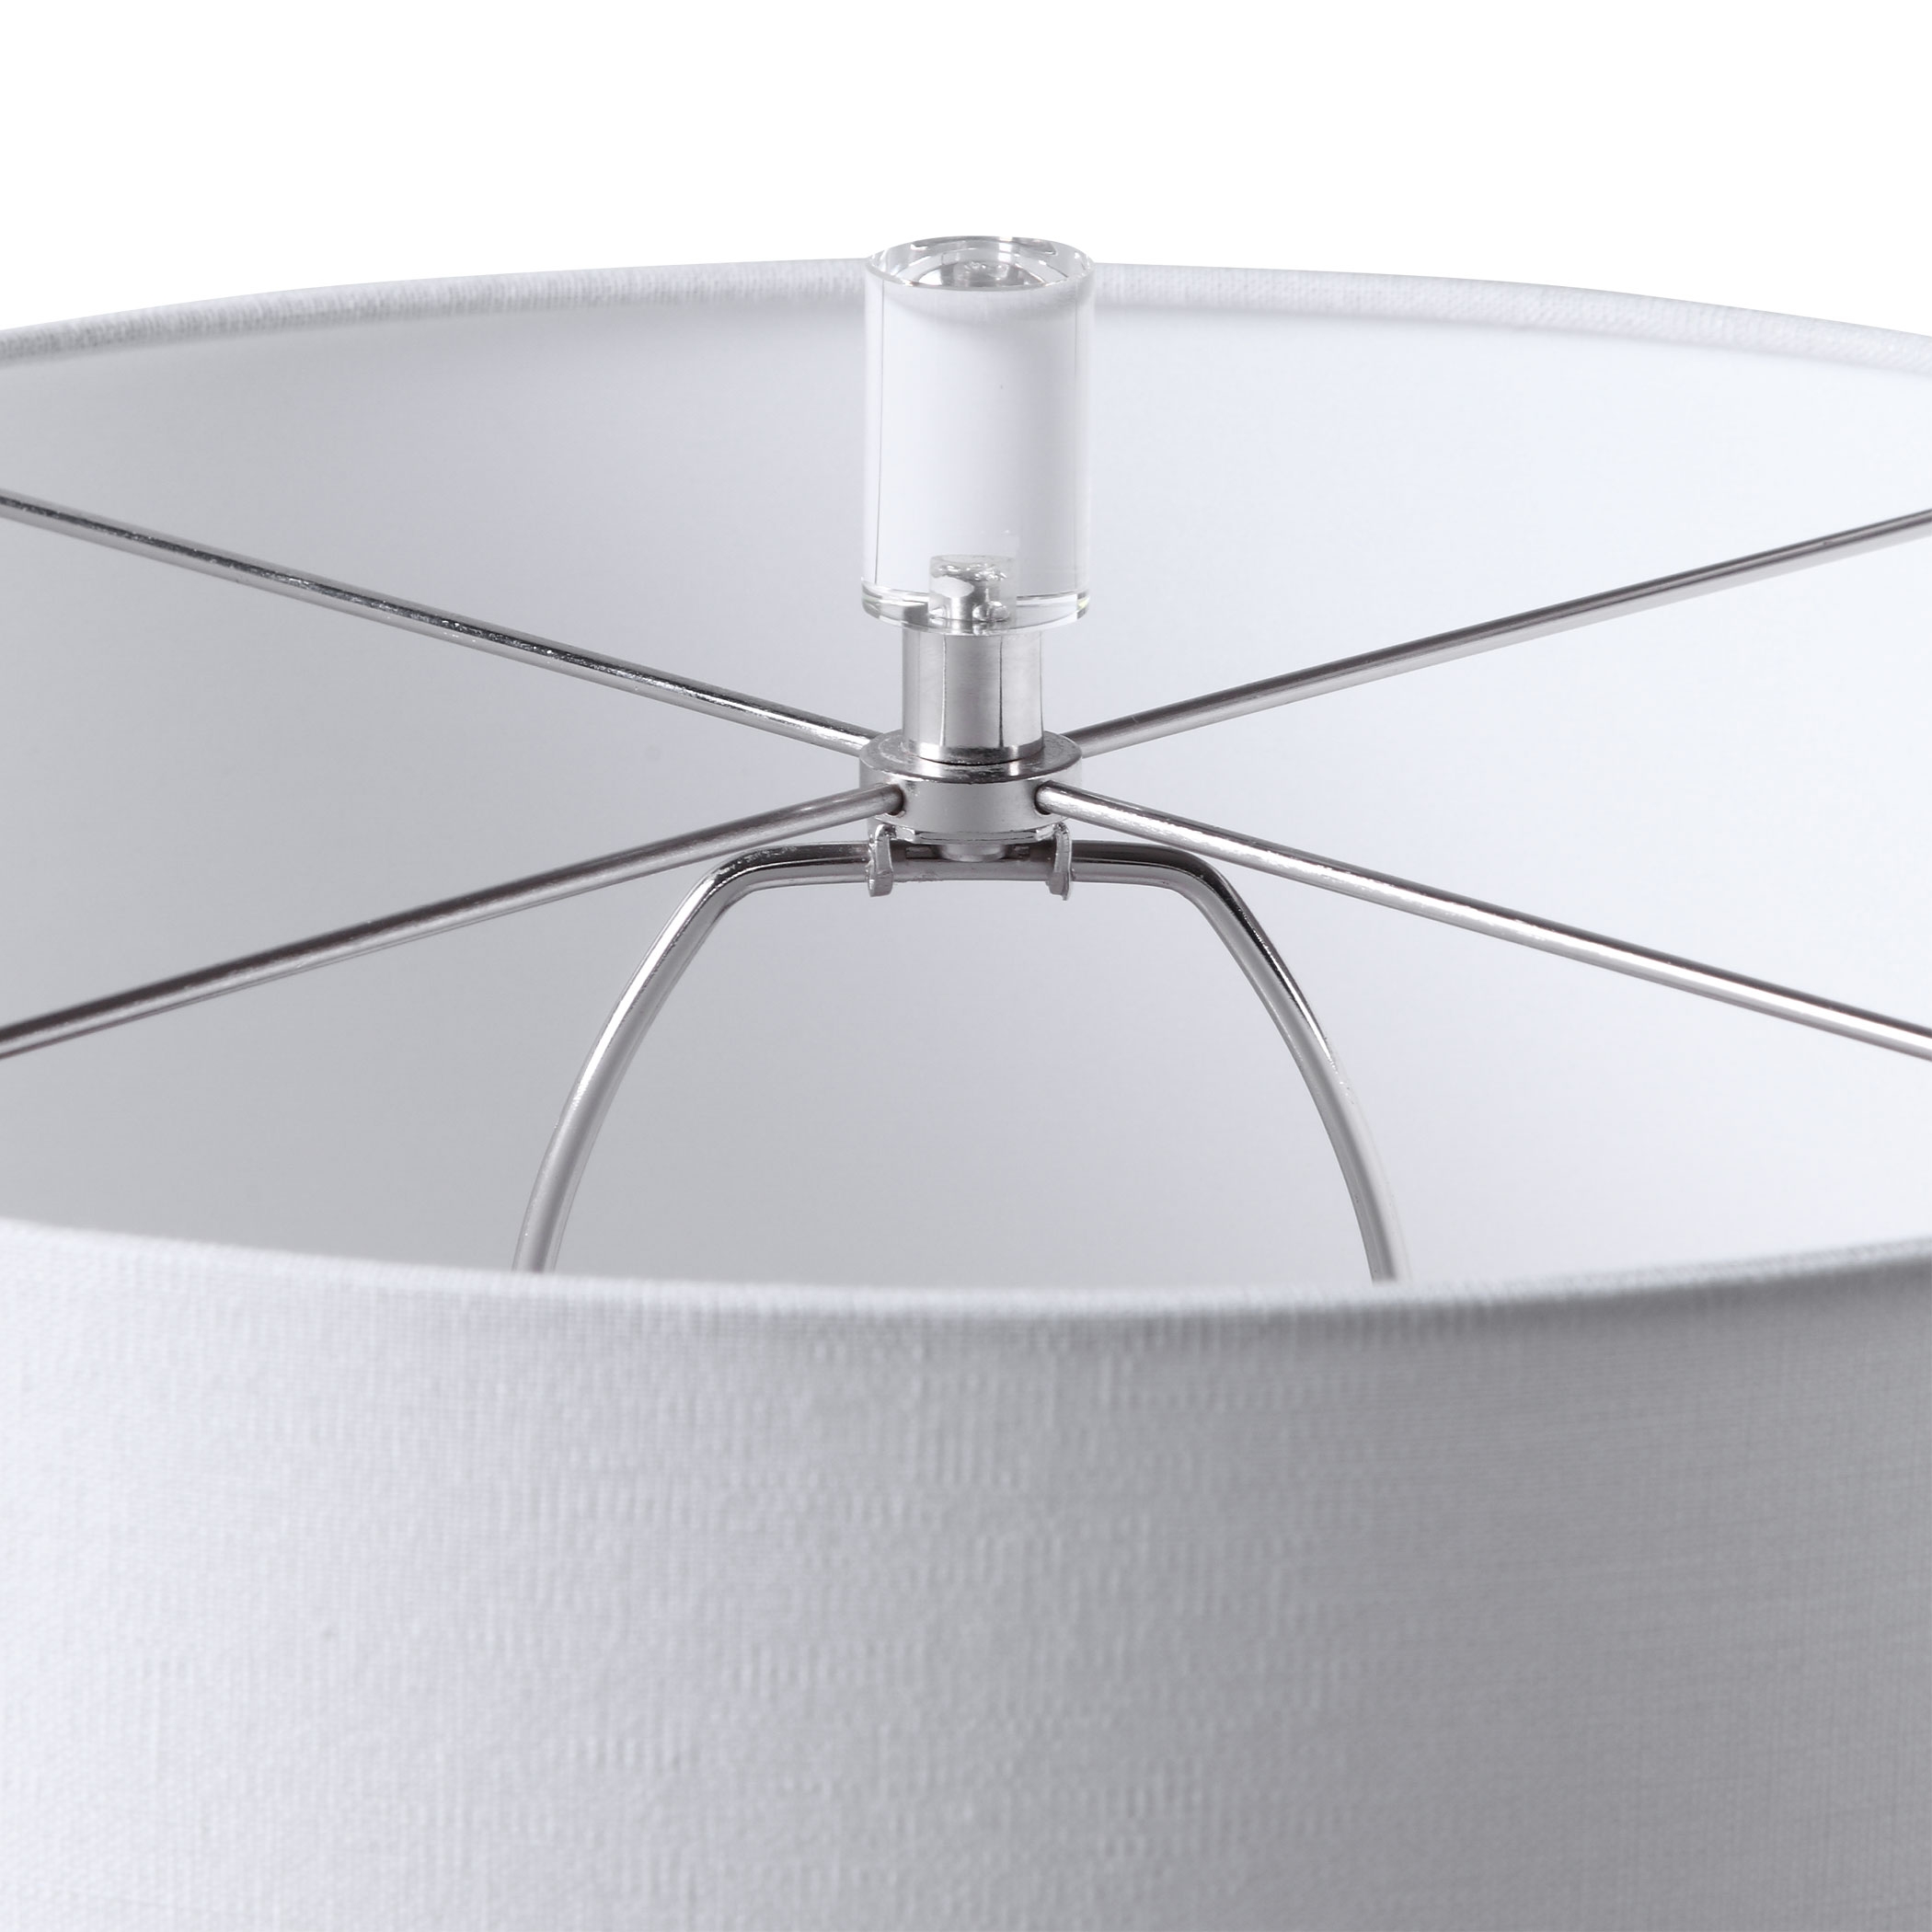 Caelina Textured White Table Lamp - Image 1